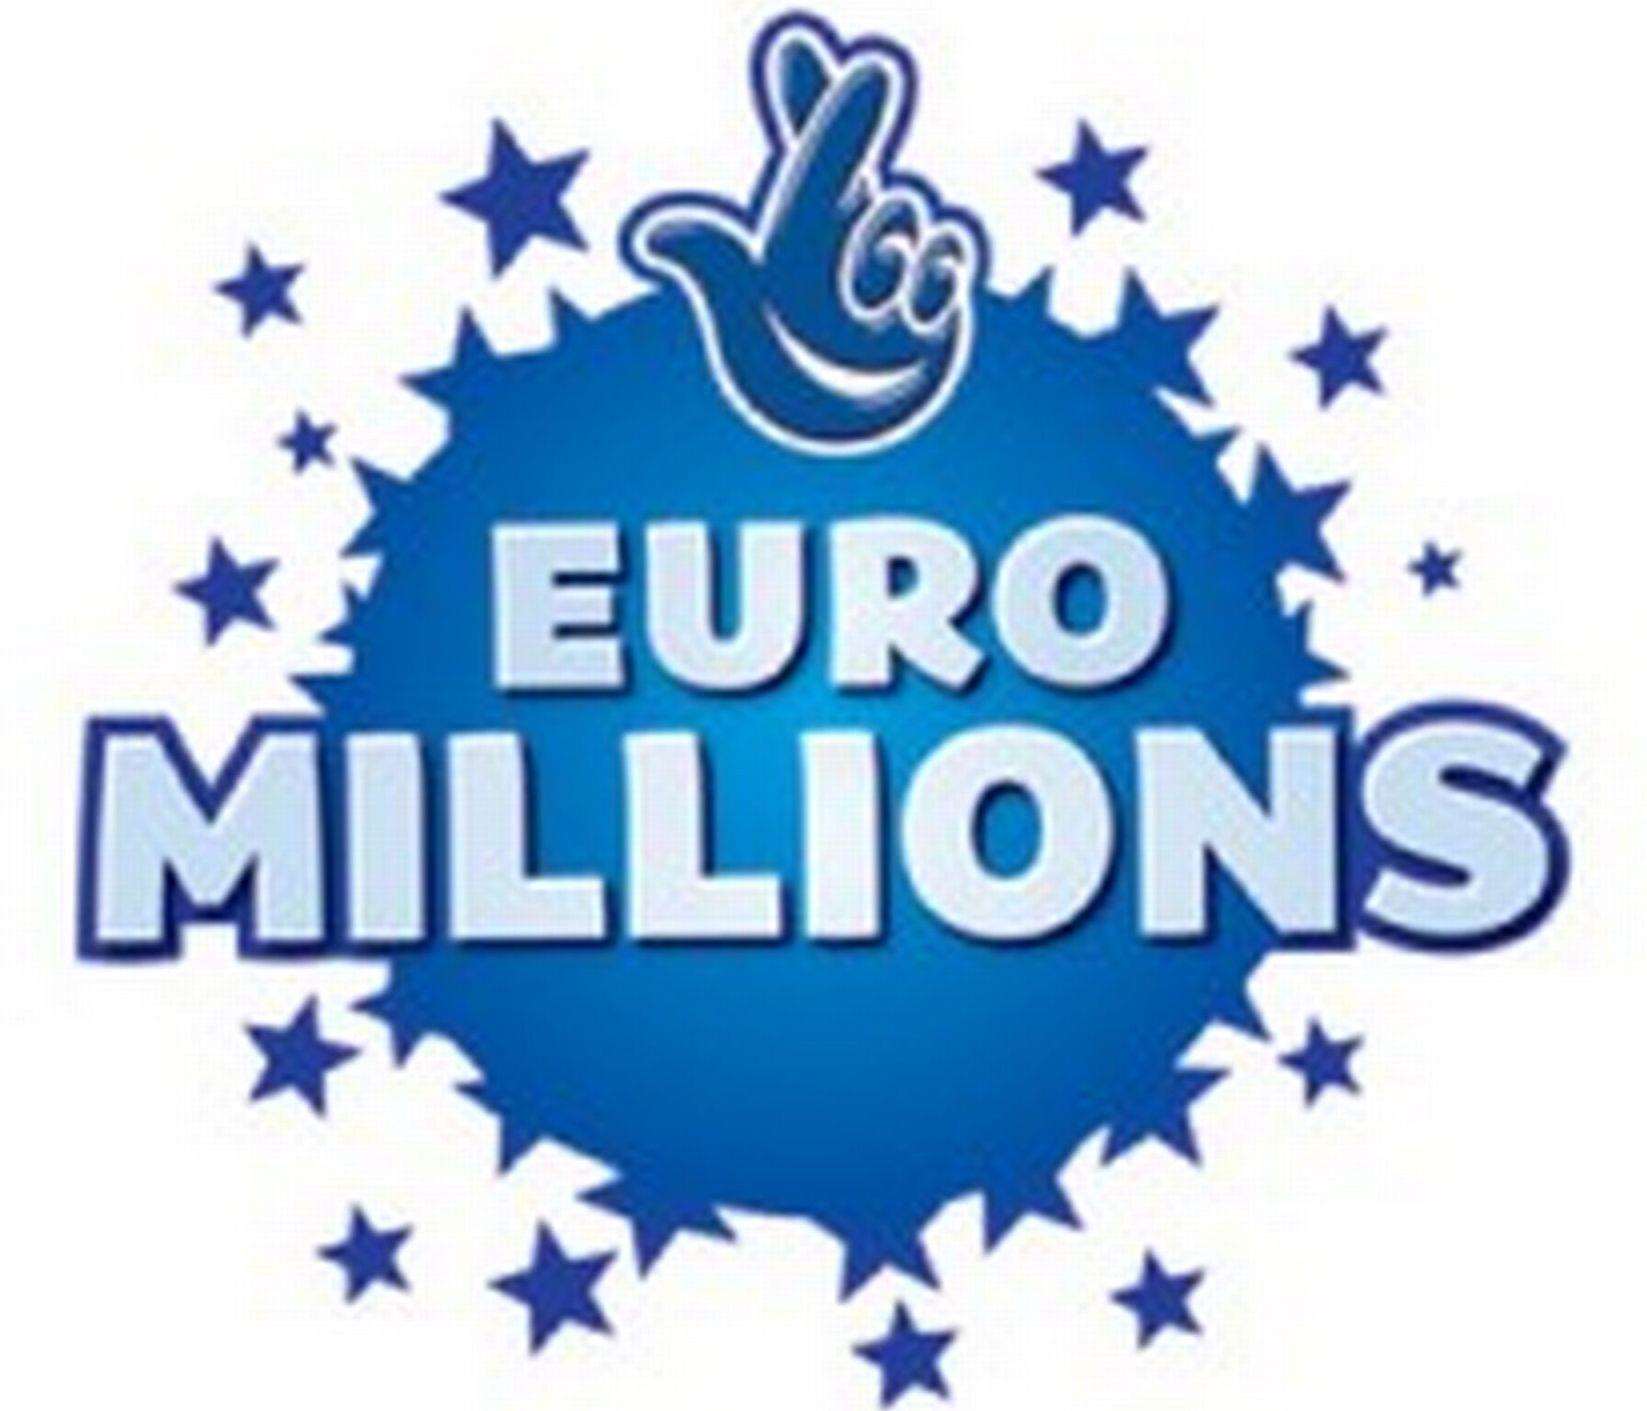 Mr M won the money on Euromillions